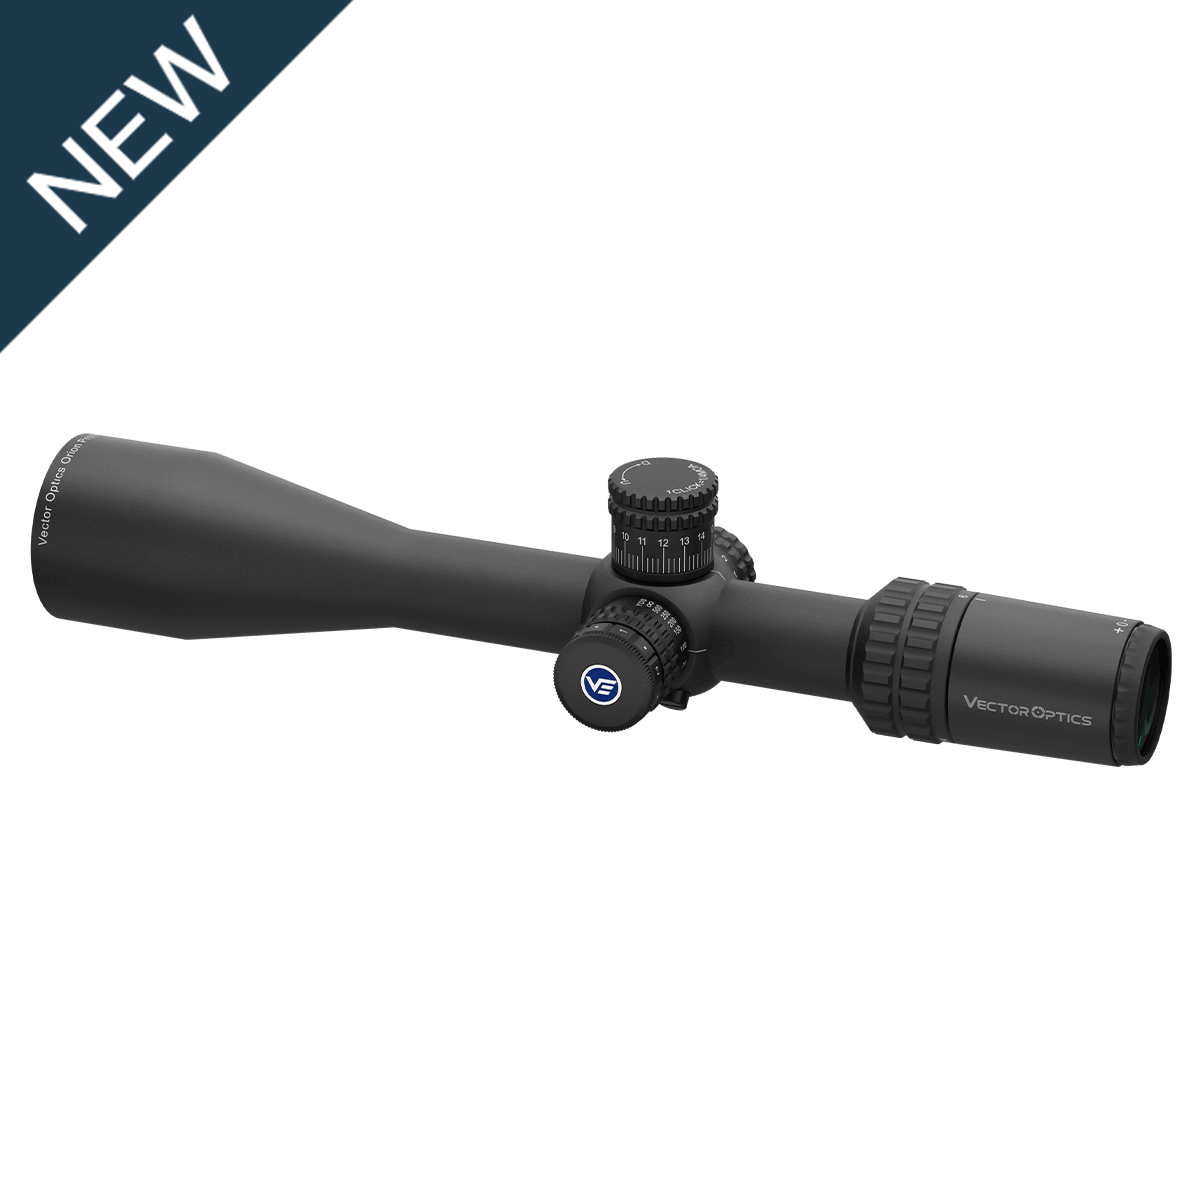 Orion Pro Max 6-24X50 FFP HD Riflescope